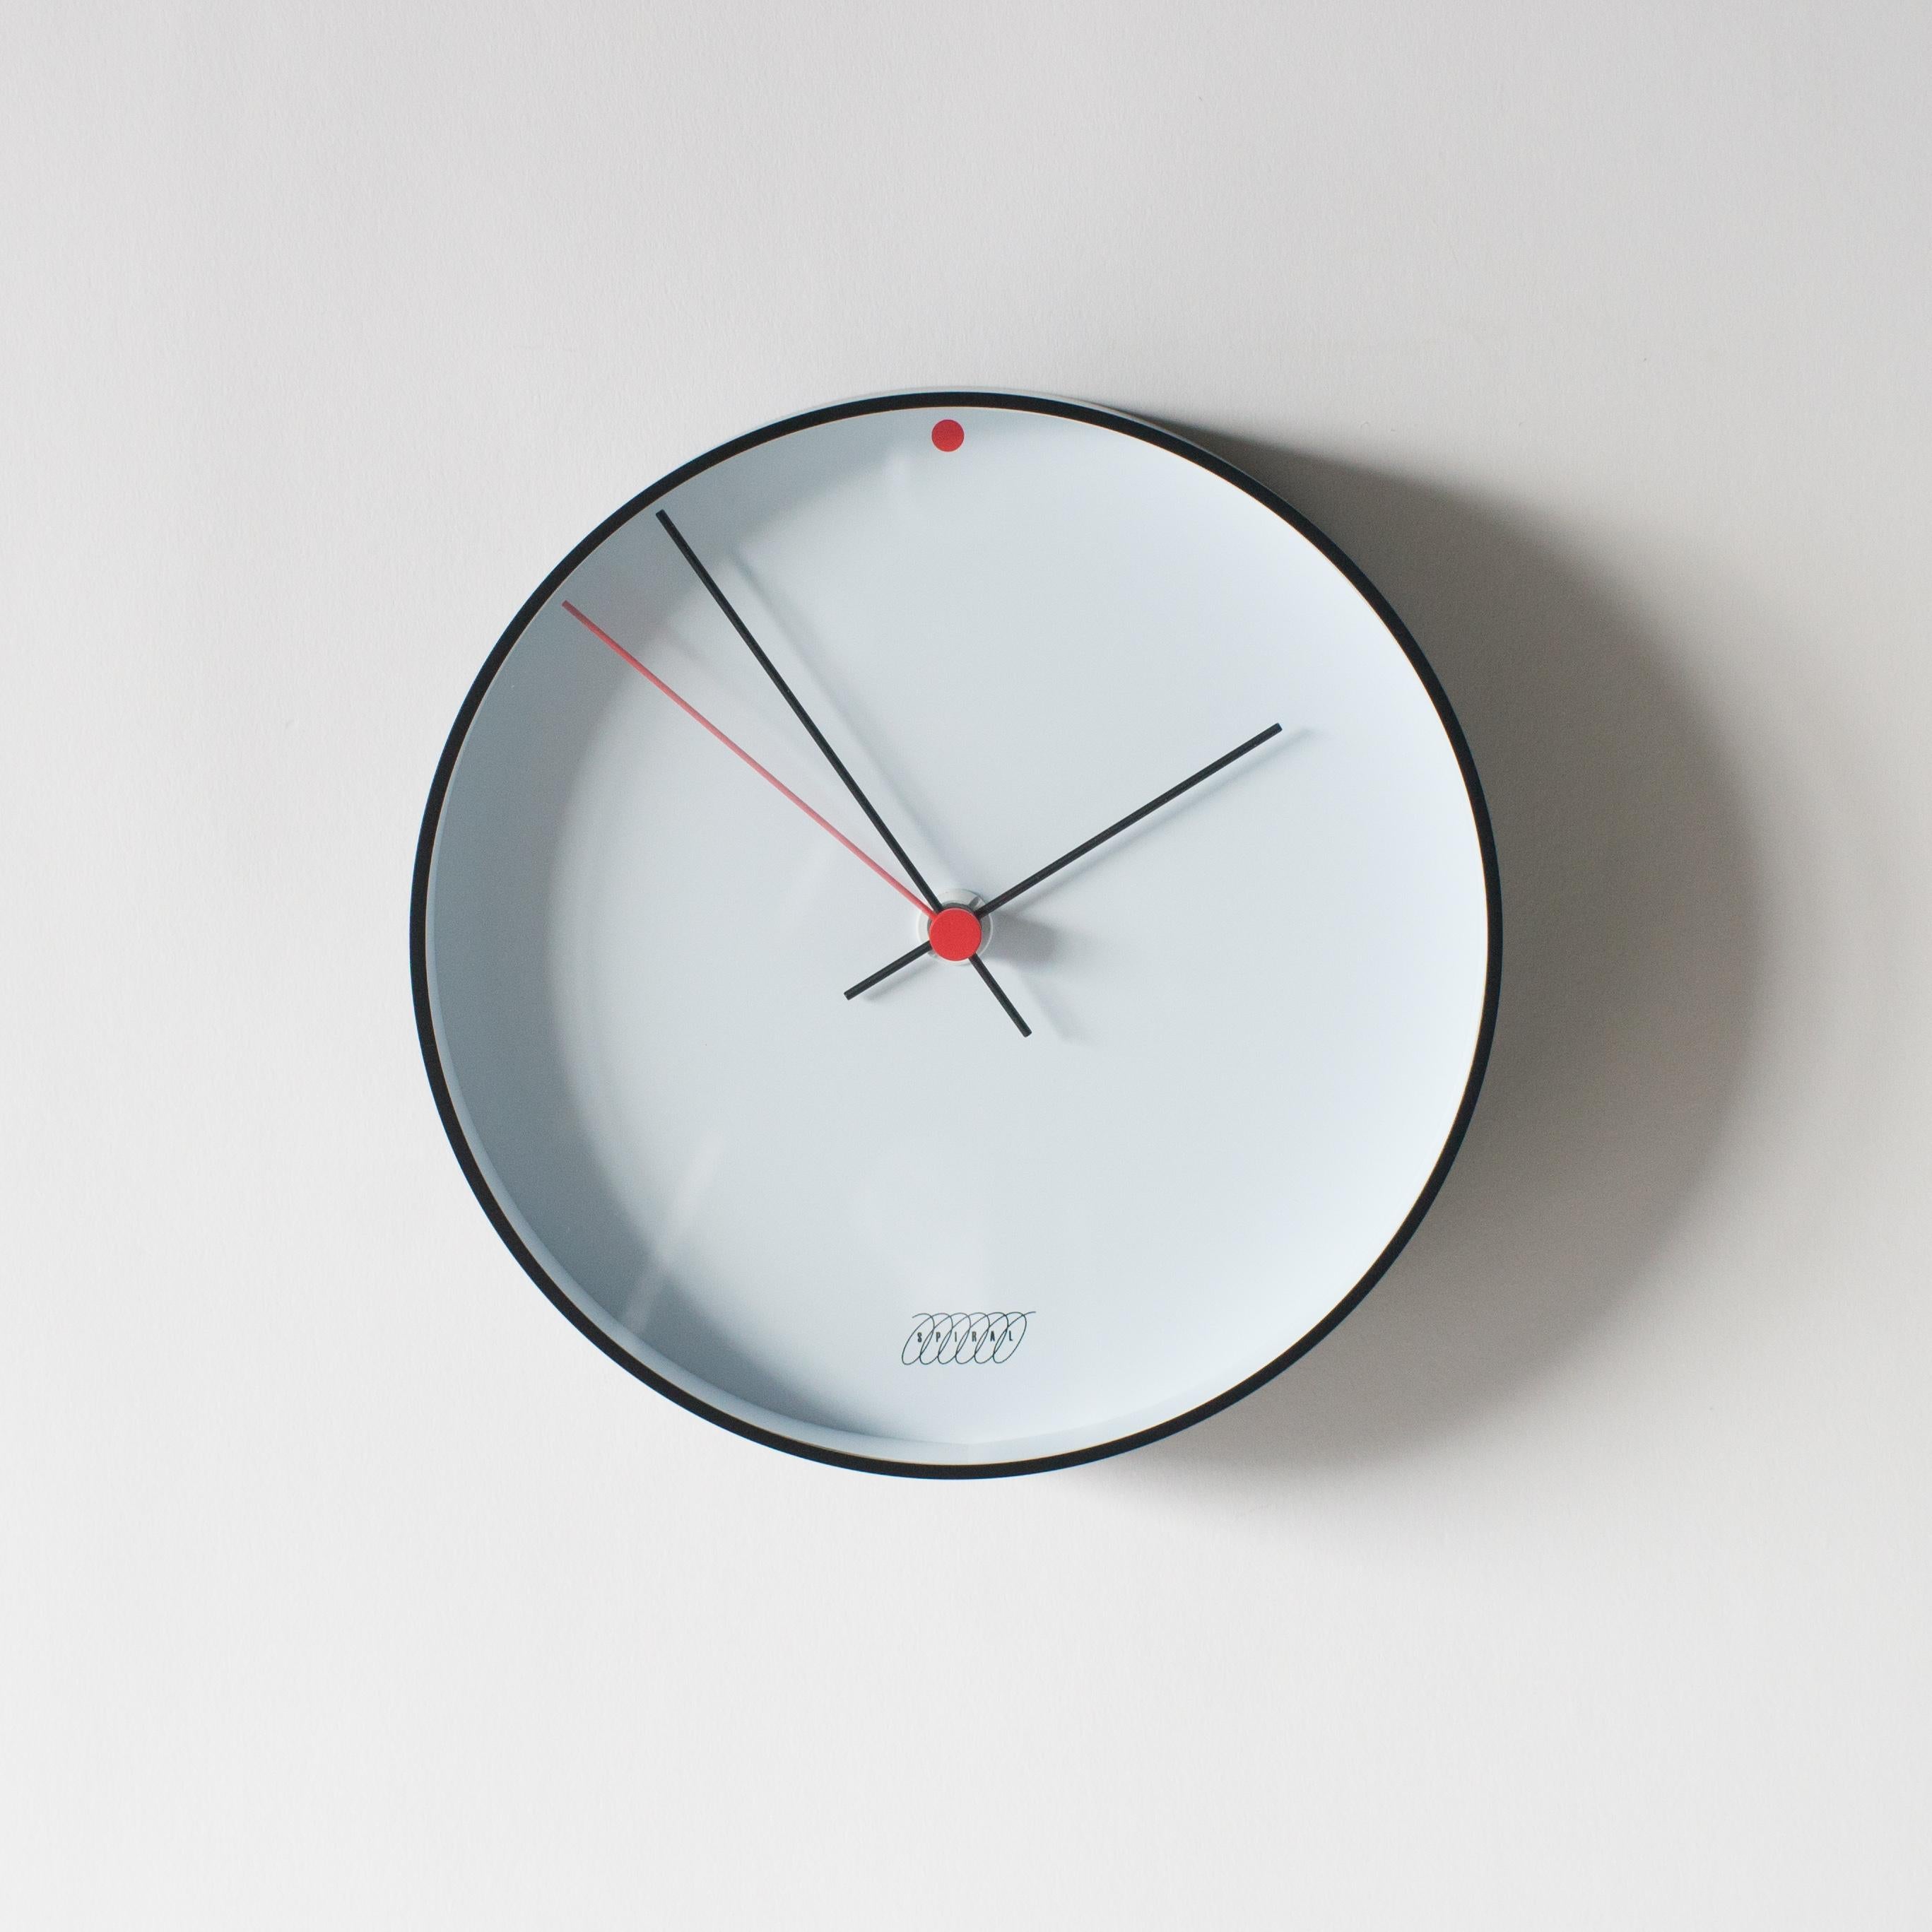 Spiral clock B designed by Shiro Kuramata. Dial is inside acrylic edge rounded shade.
 